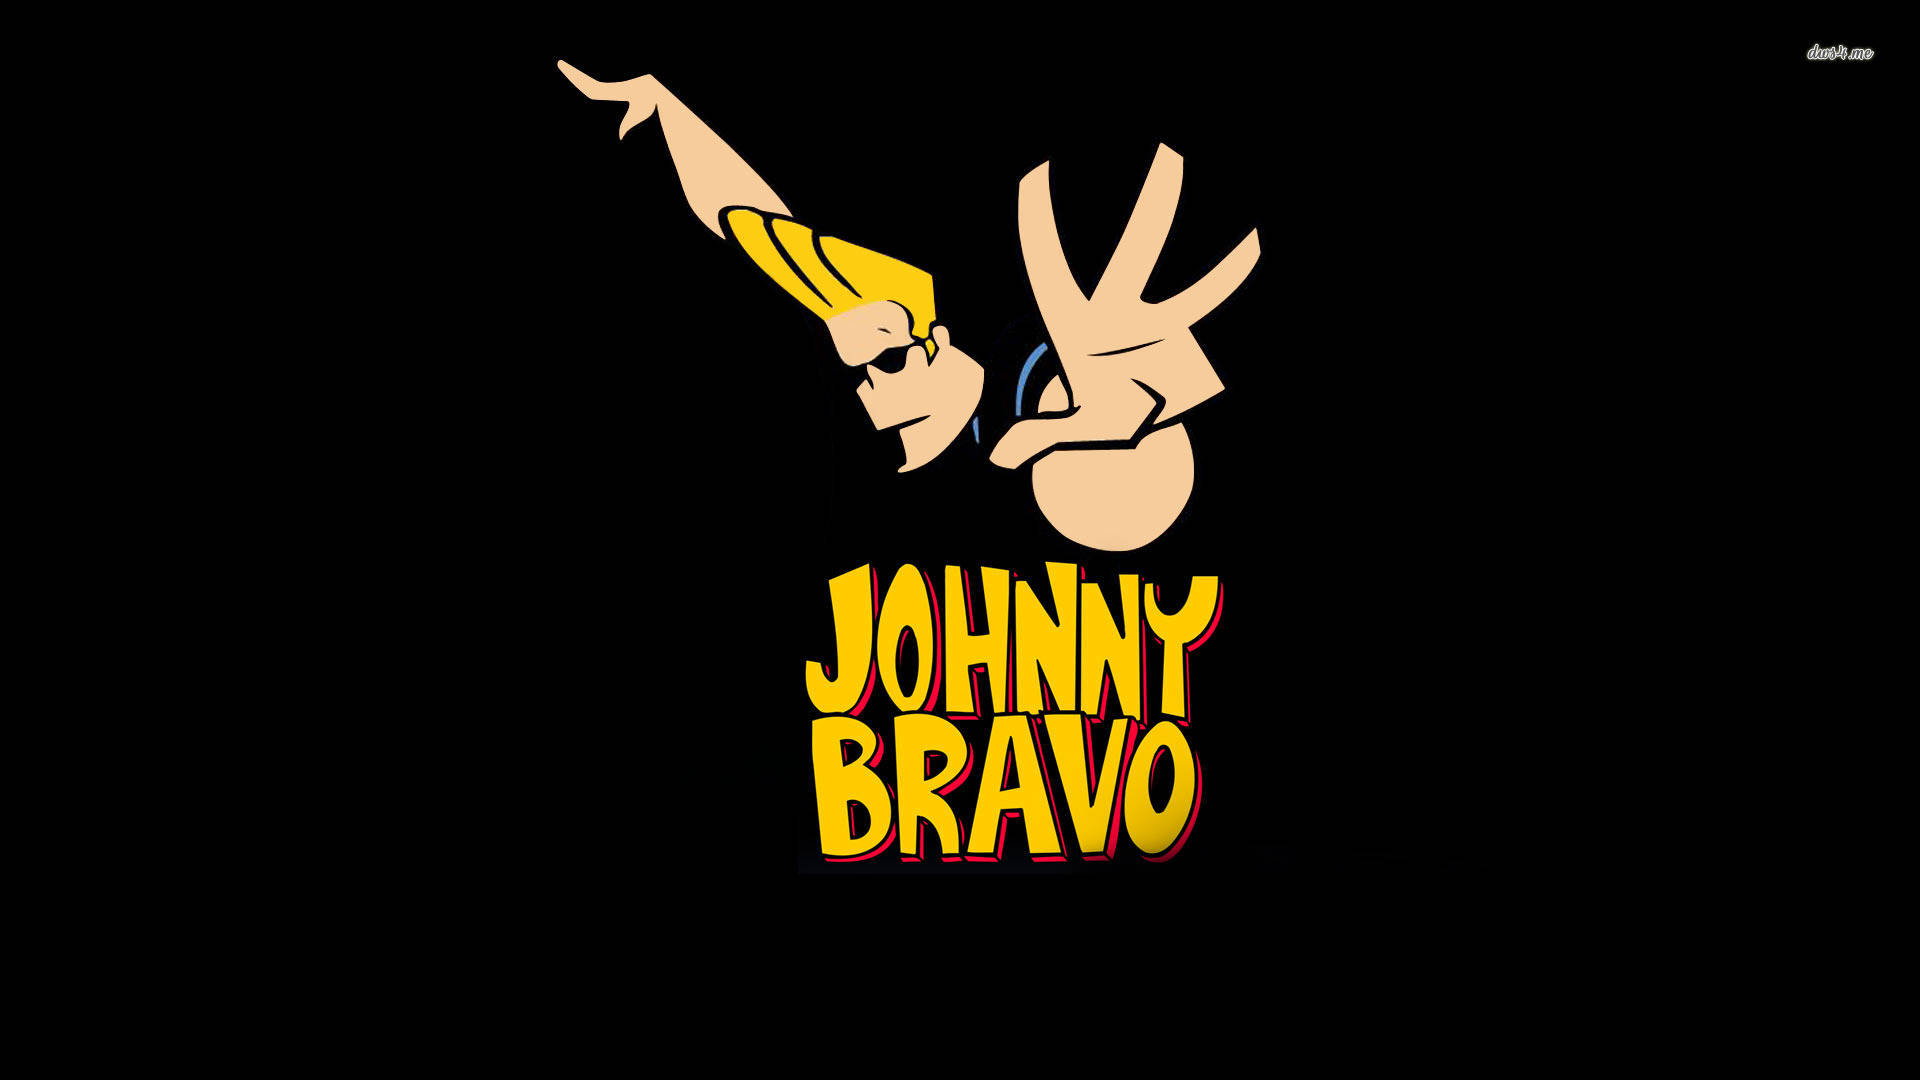 Johnny Bravo Wallpaper Images